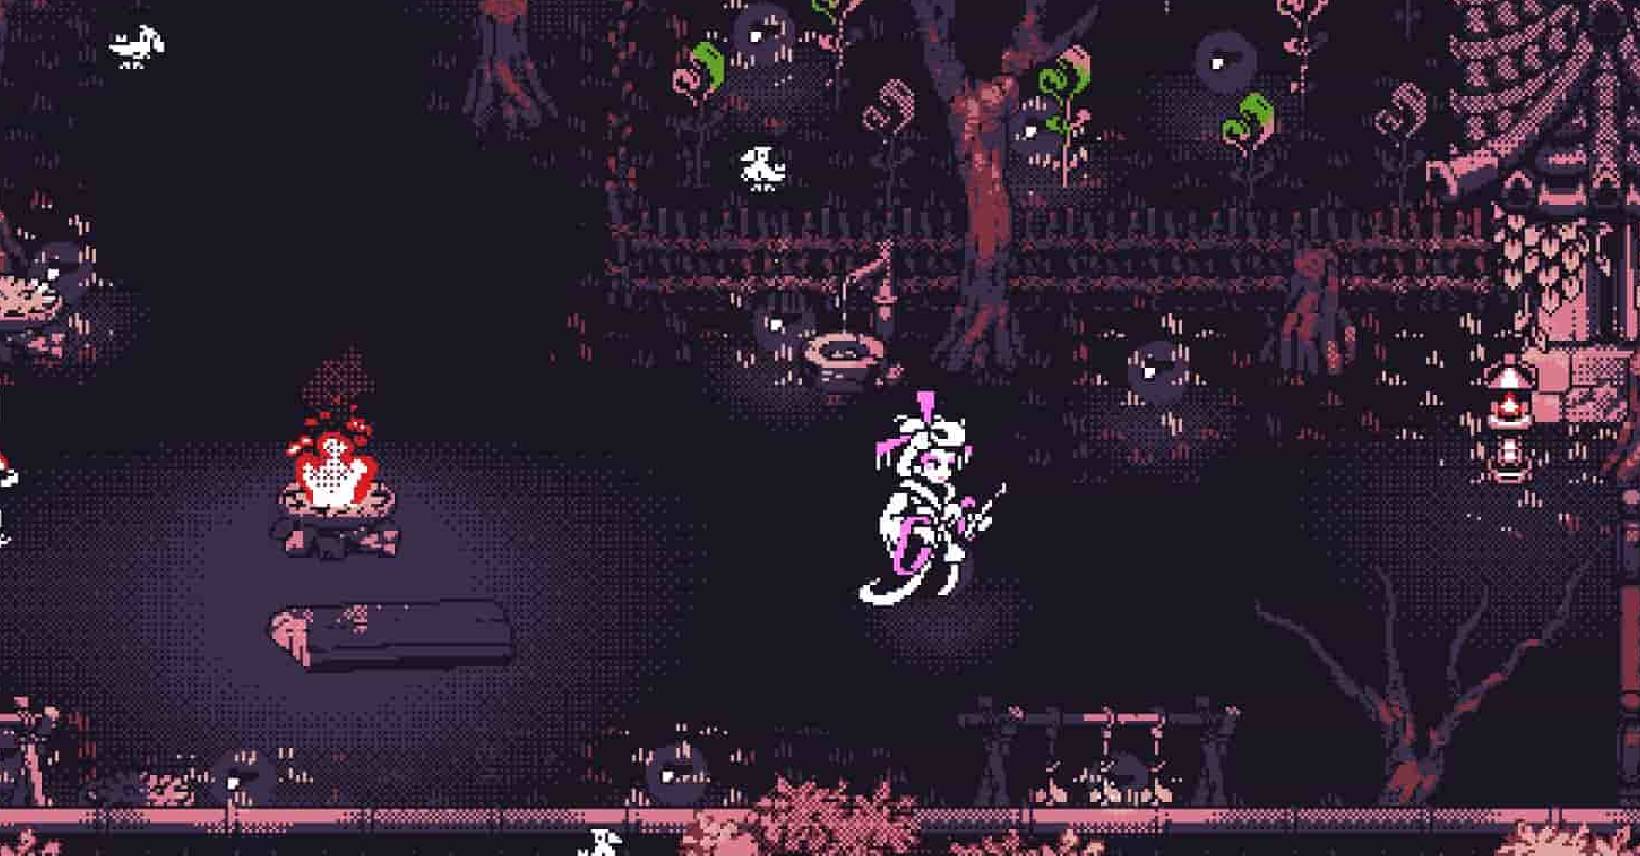 Sekiro meets Zelda-for-pacifists in this beautiful pixel art Samurai game